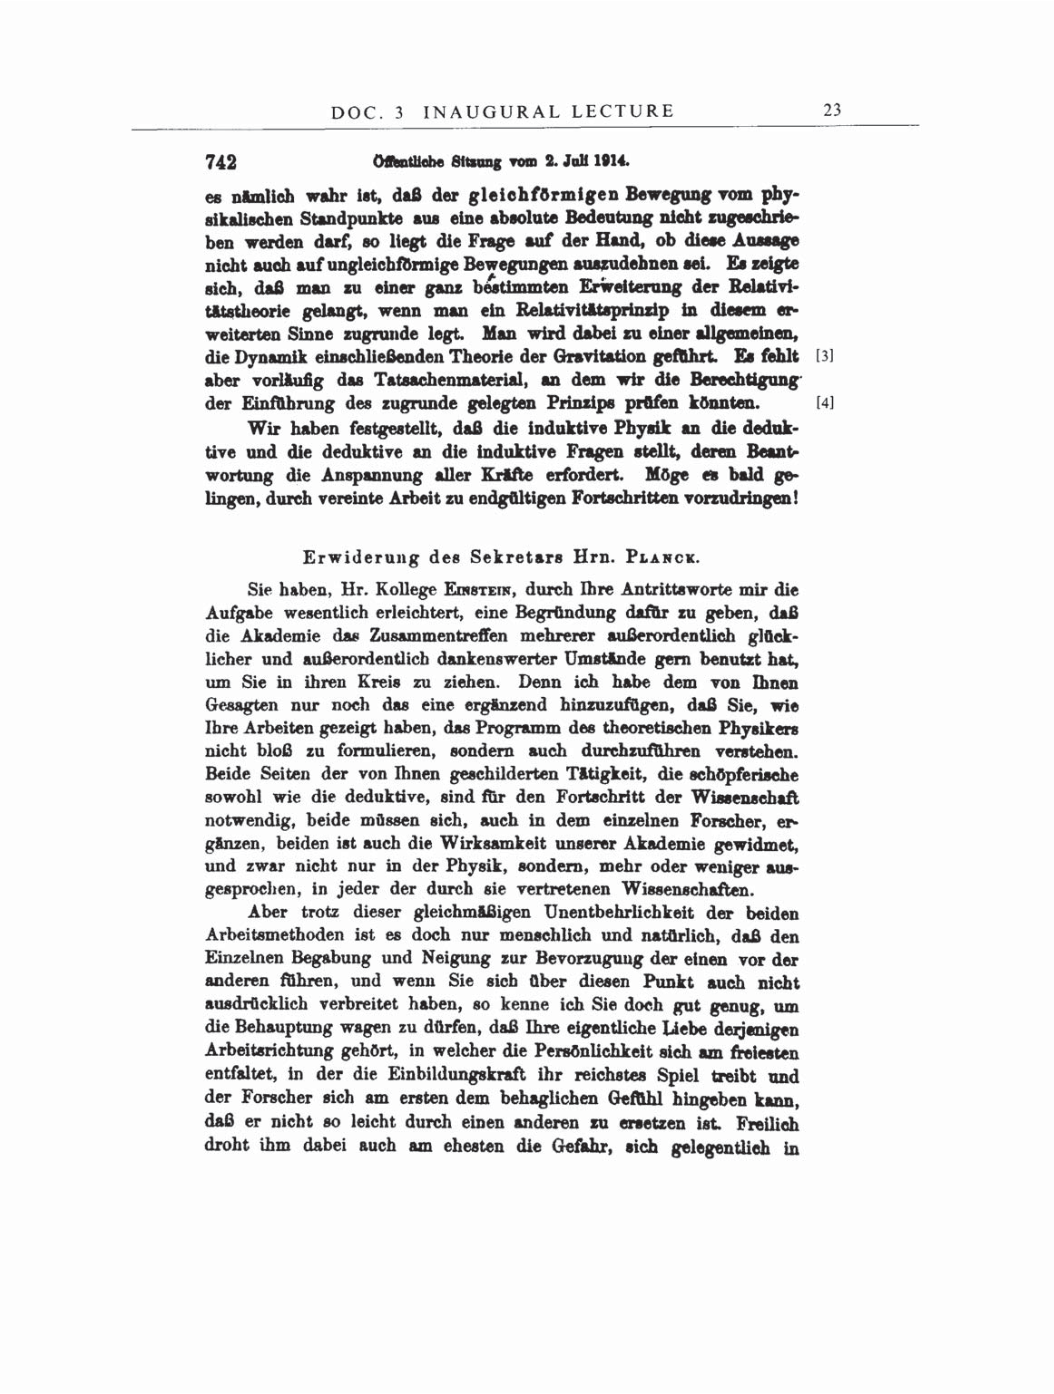 Volume 6: The Berlin Years: Writings, 1914-1917 page 23